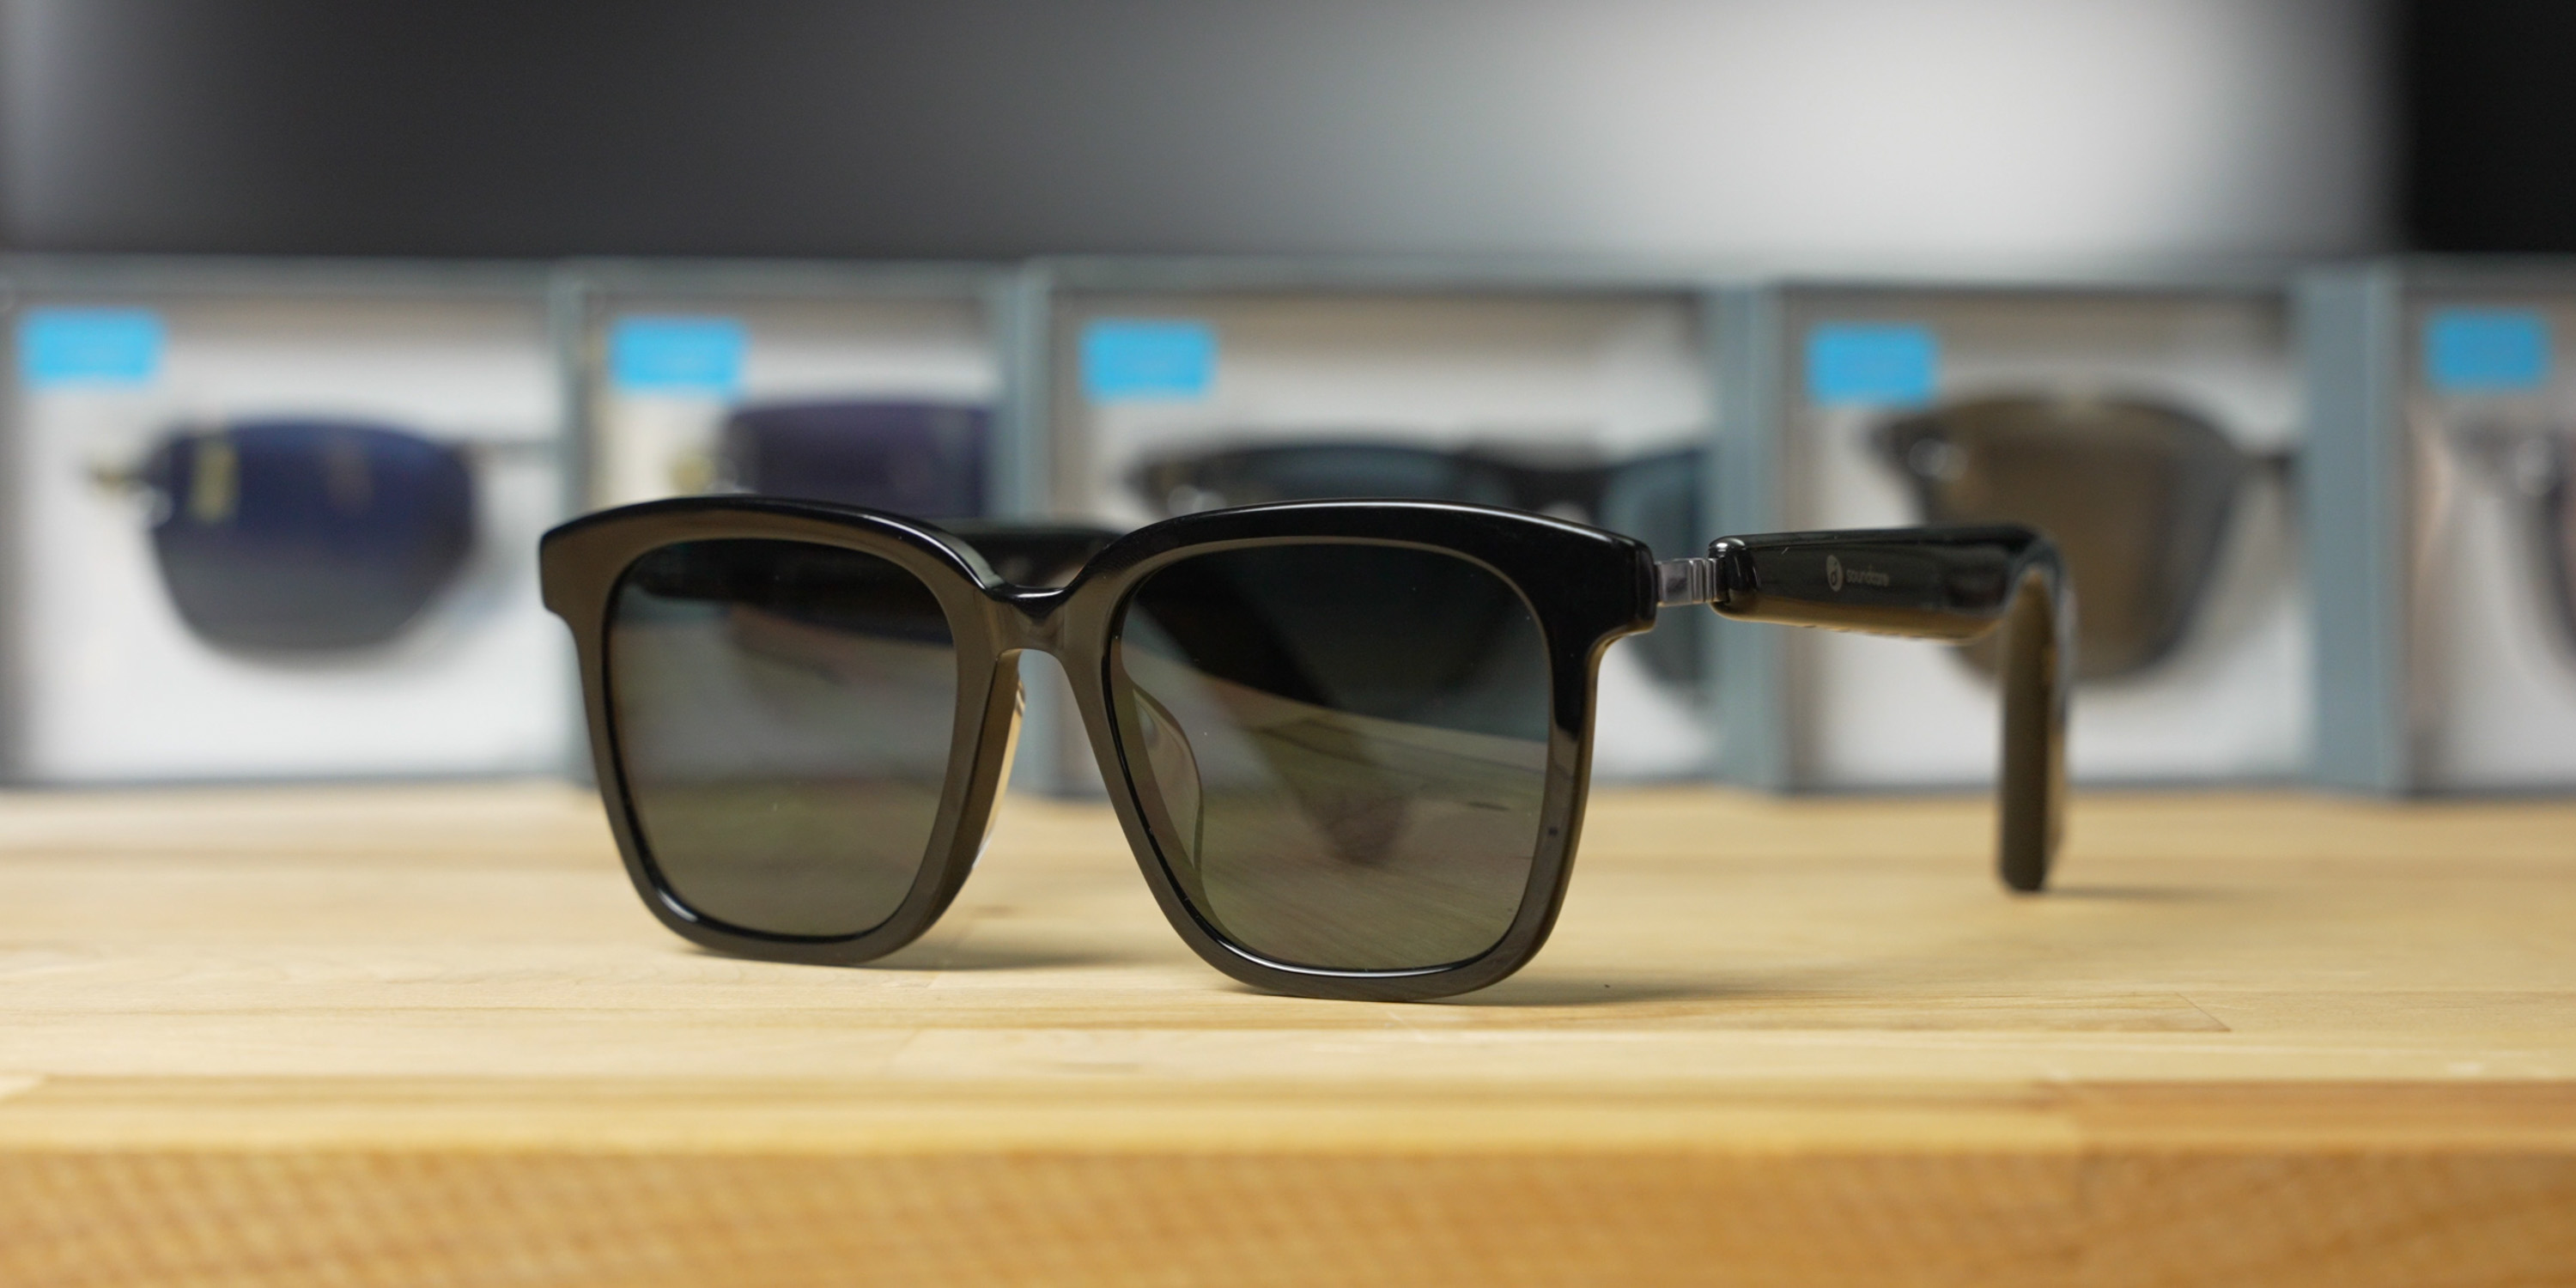 Anker's interchangeable Soundcore Frames smart glasses fall to new